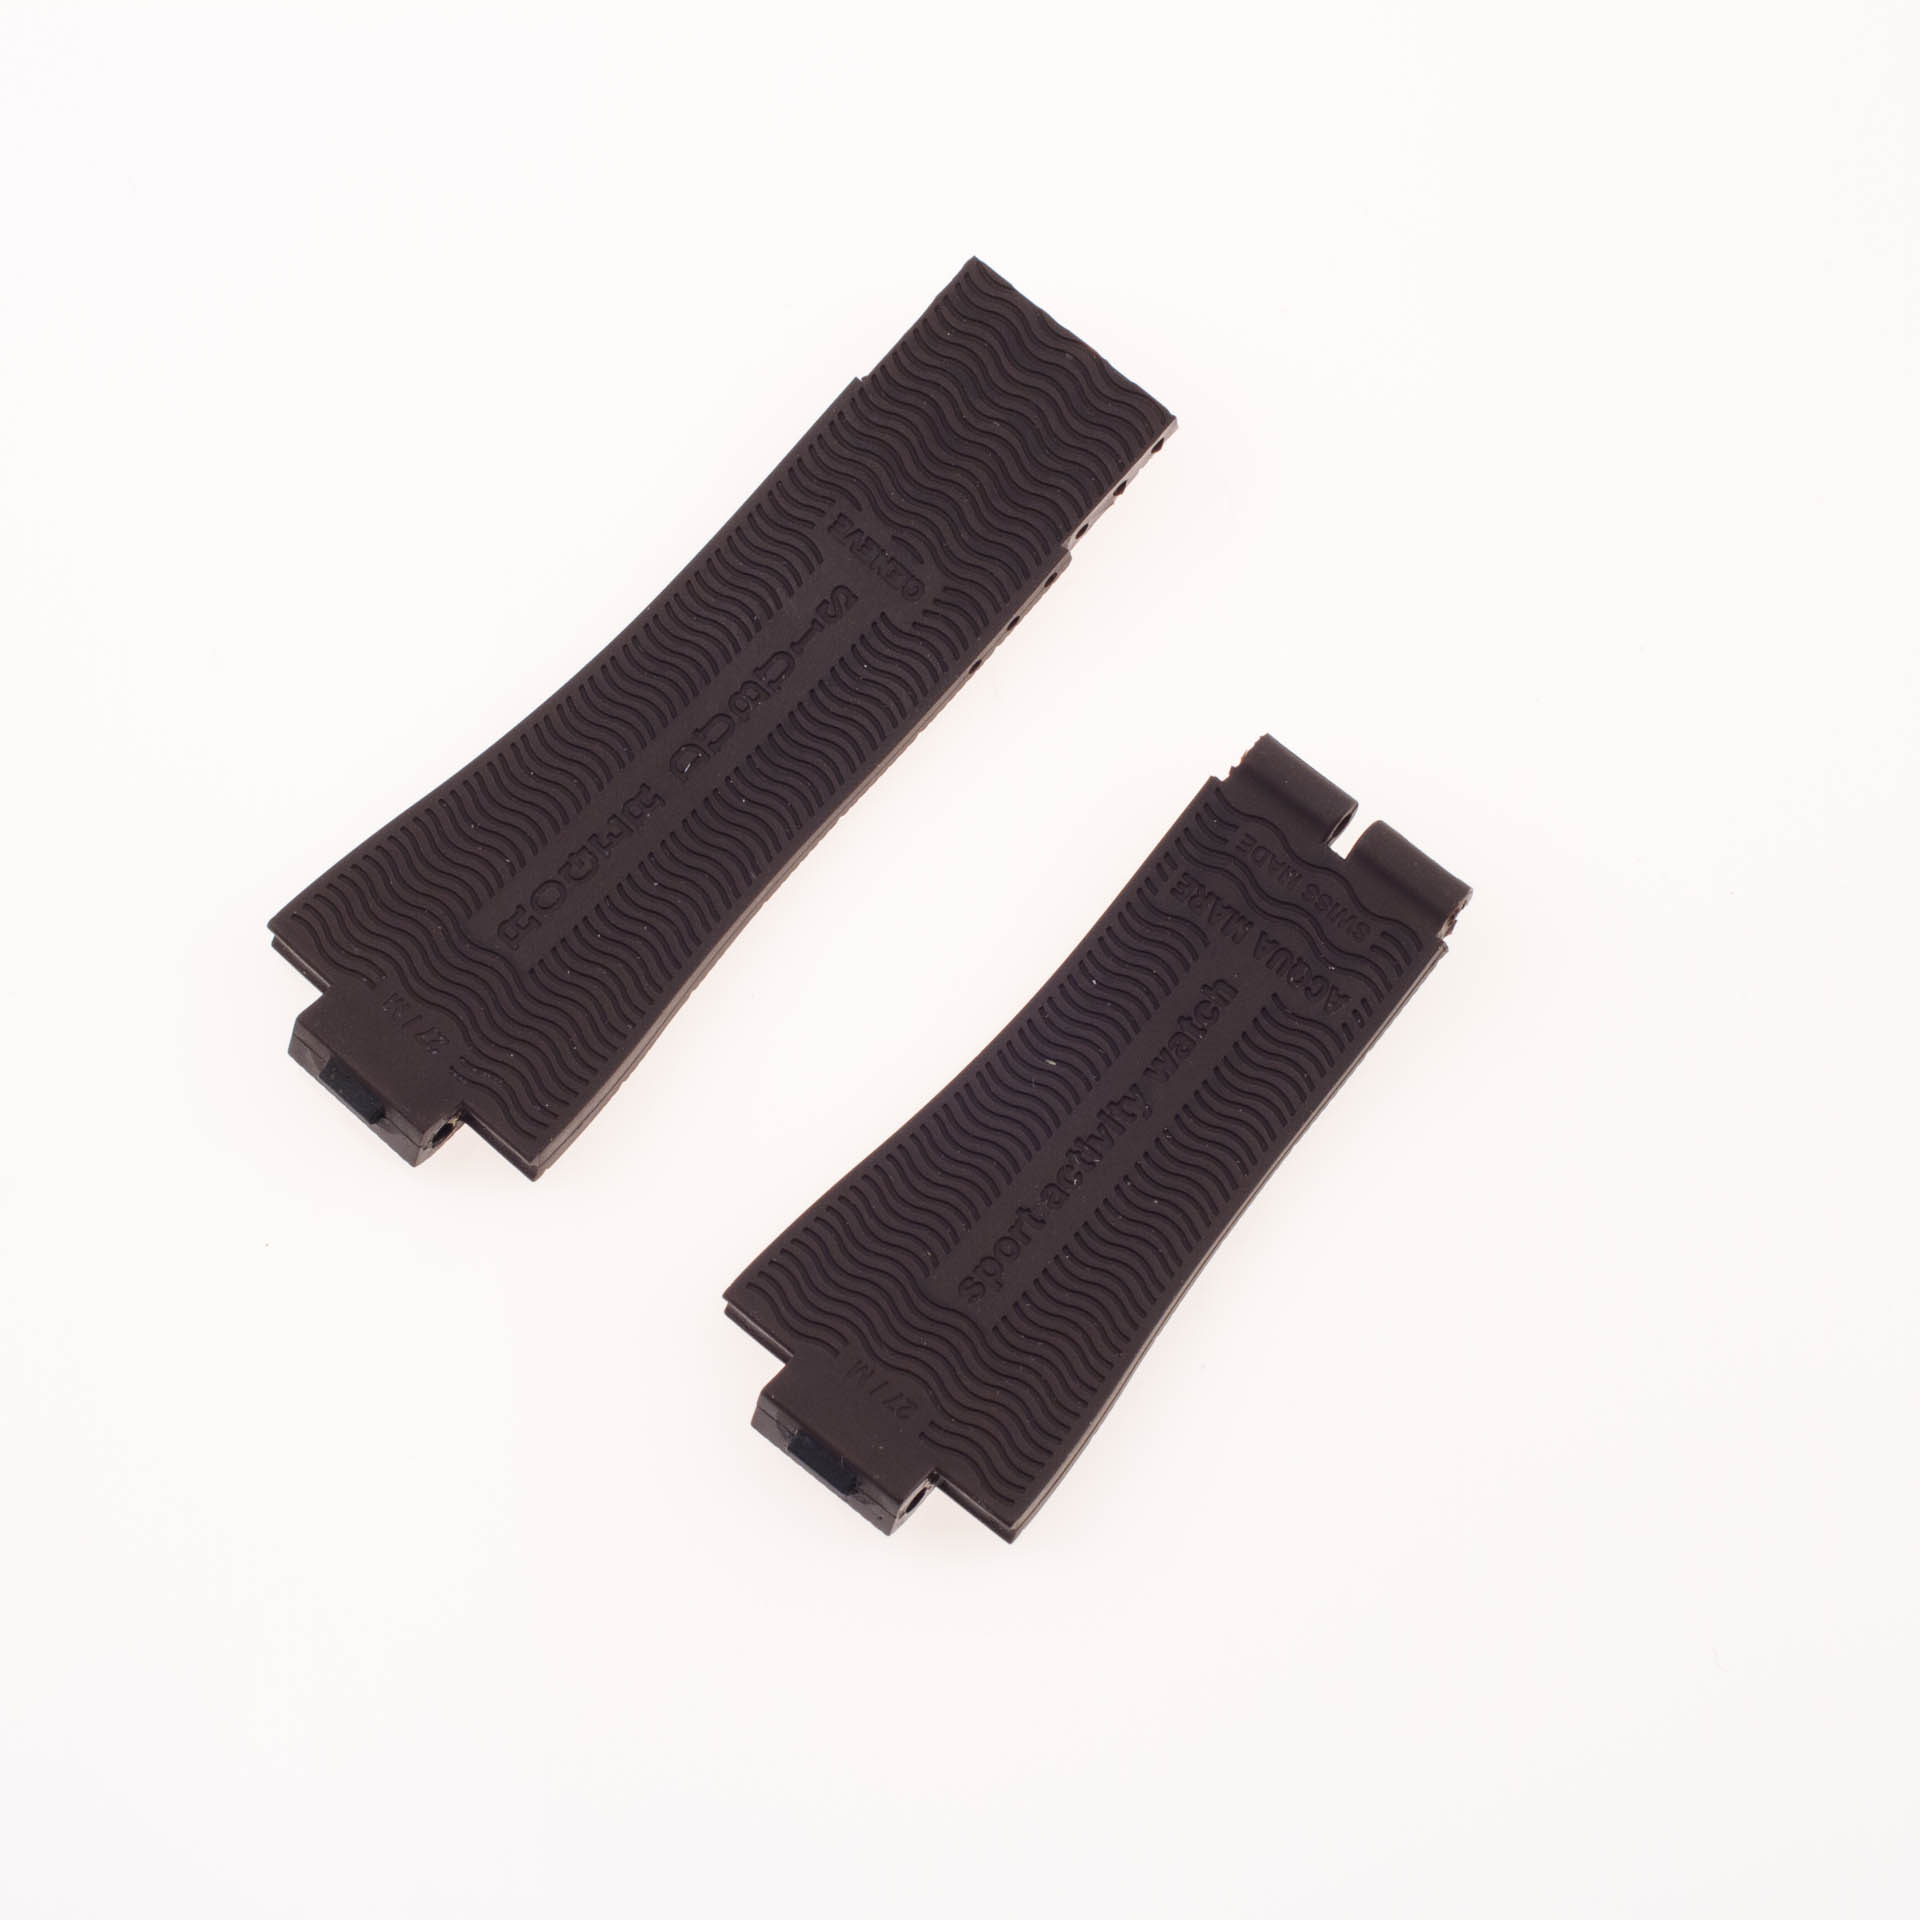 Roger Dubuis Acquamare dark brown rubber strap (27x21) image 2